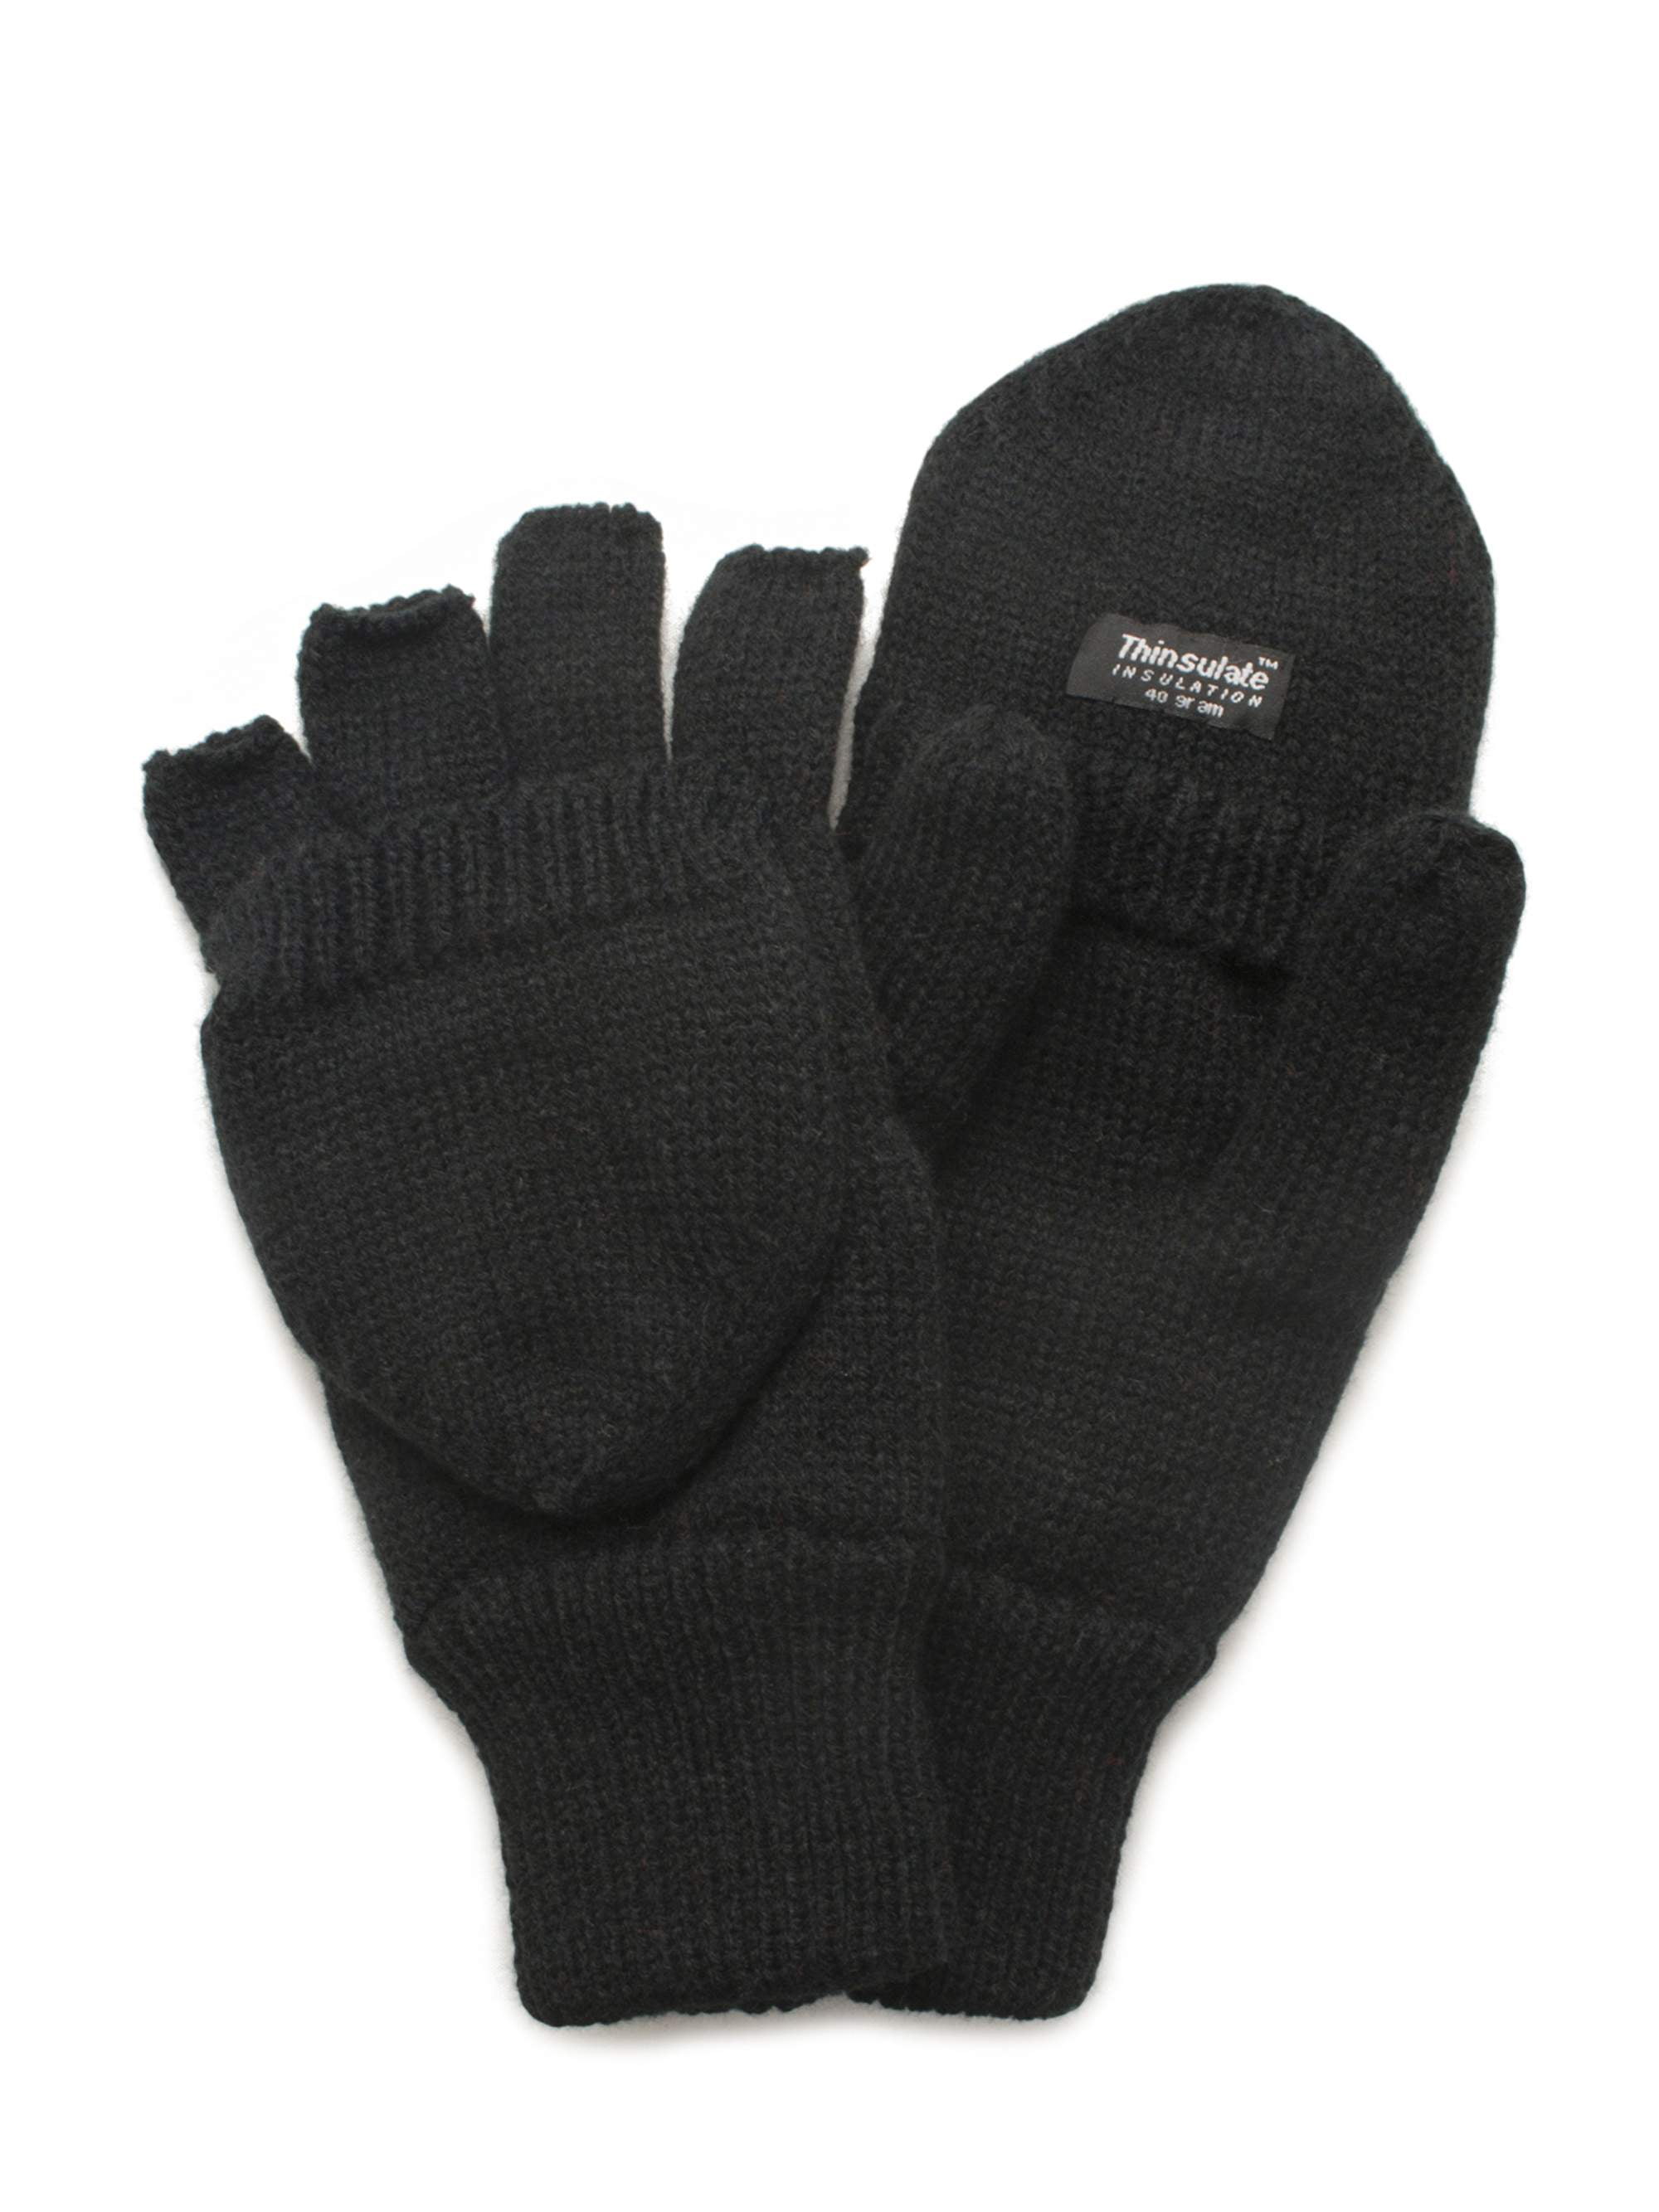 Mens 3M Thinsulate 40 gram Thermal Insulated Winter Knit Black Fingerless Gloves 